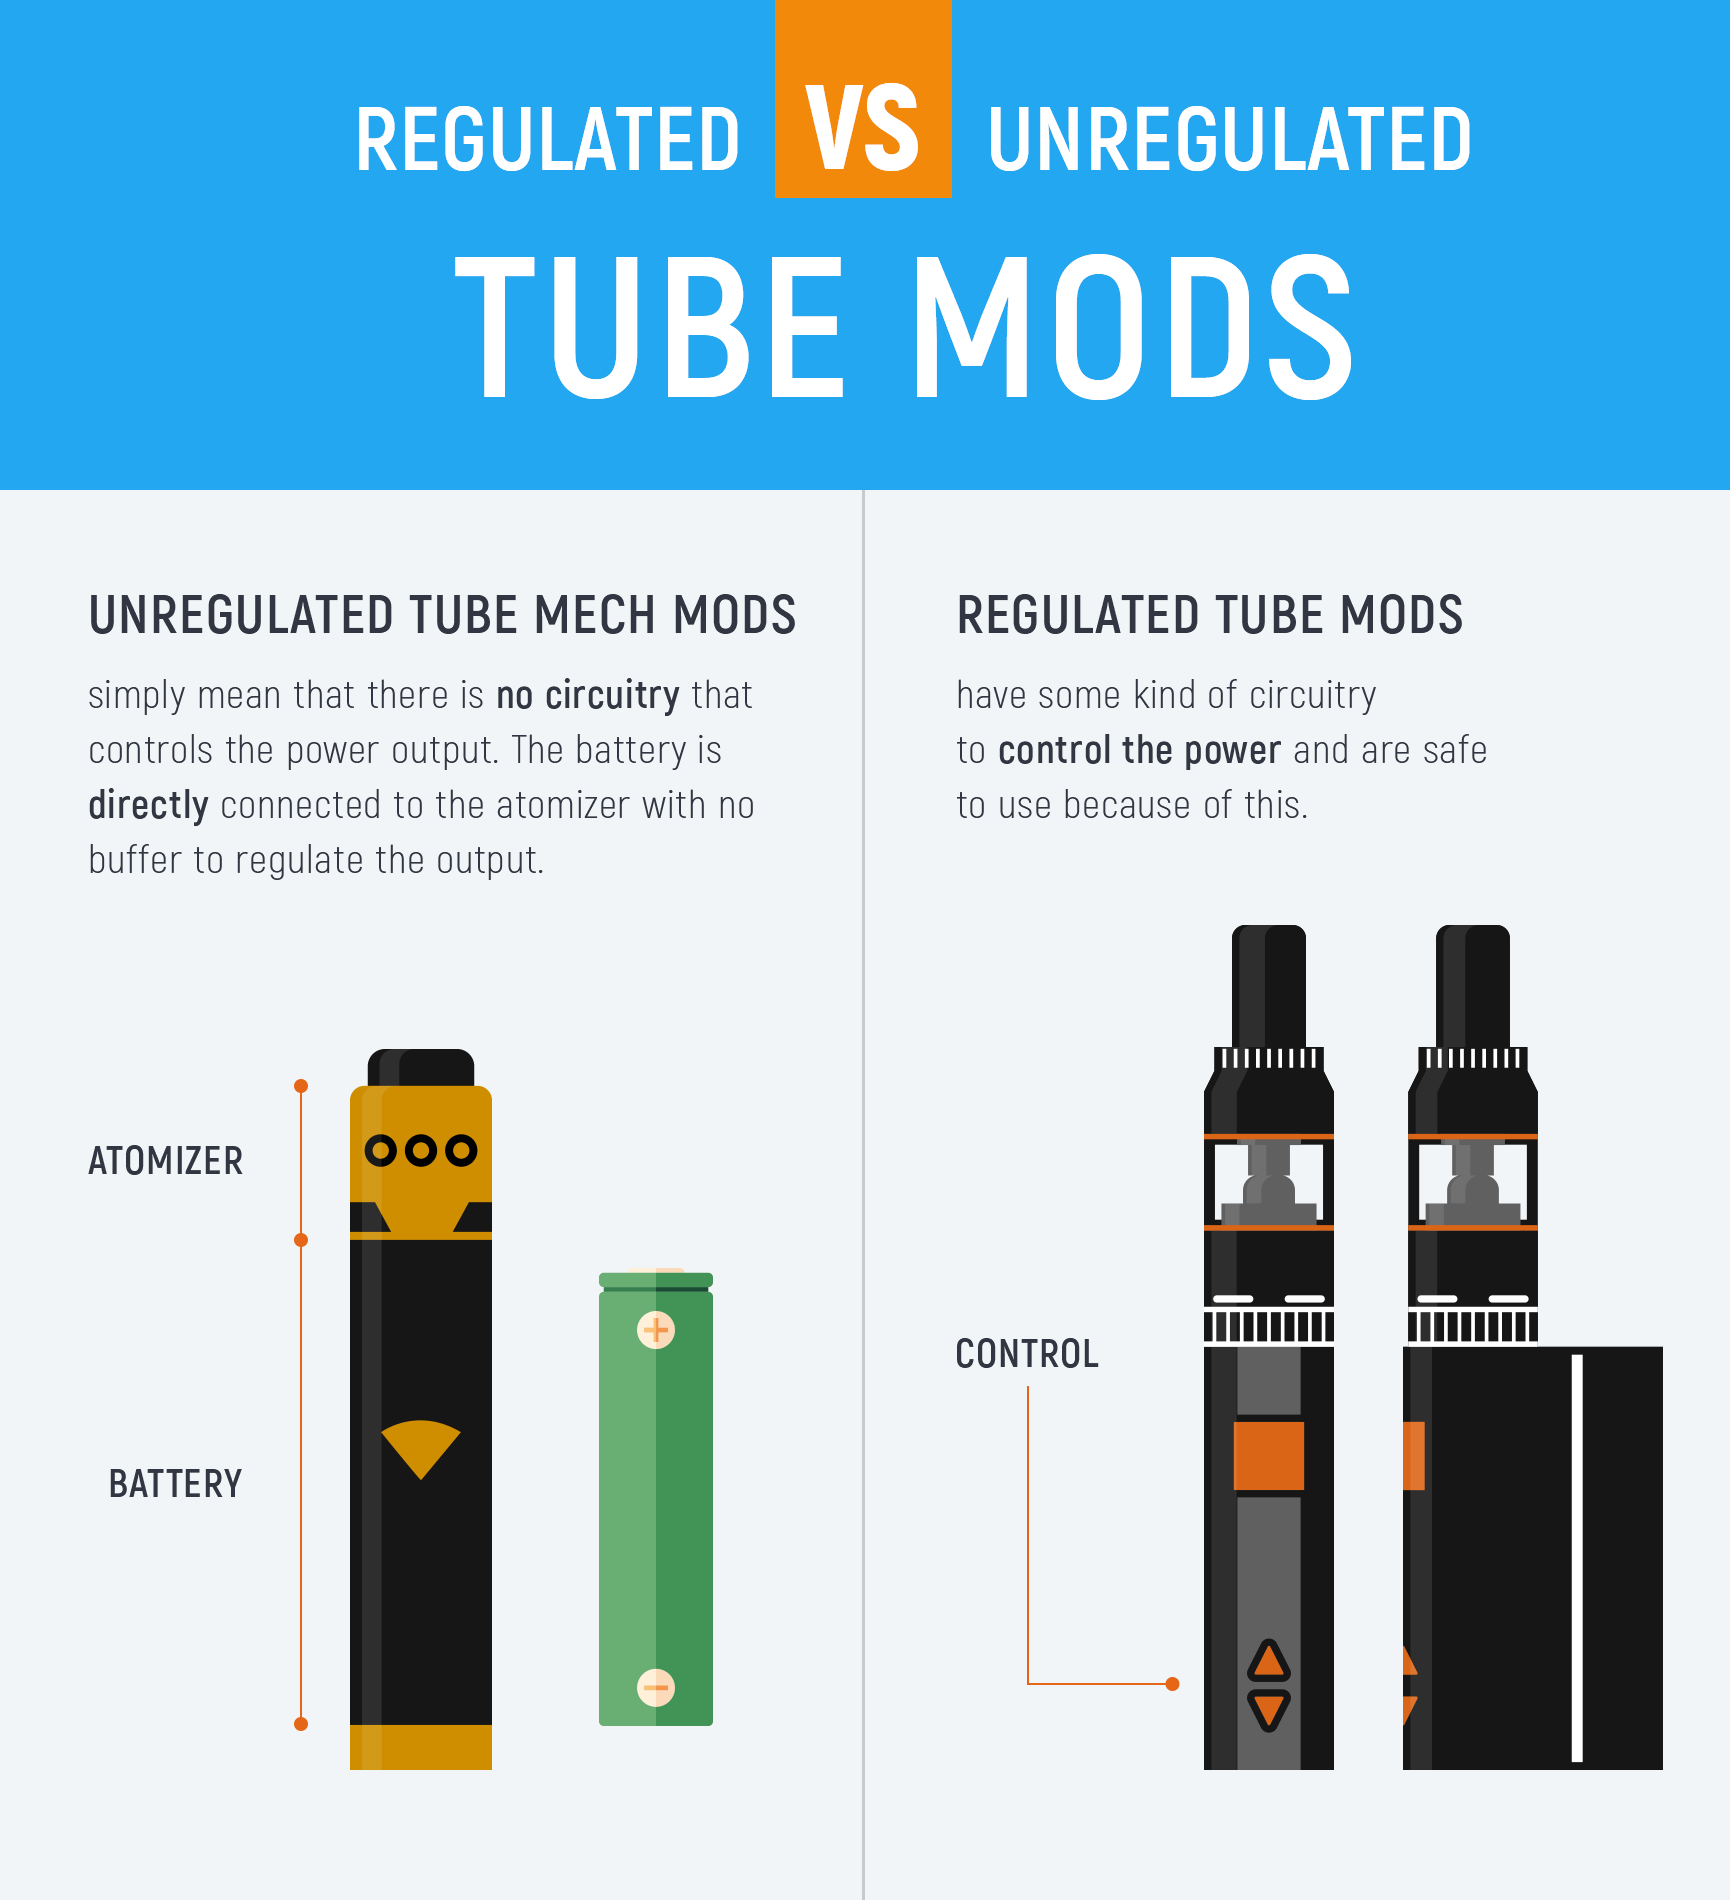 Regulated vs Unregulated Tube Mods image